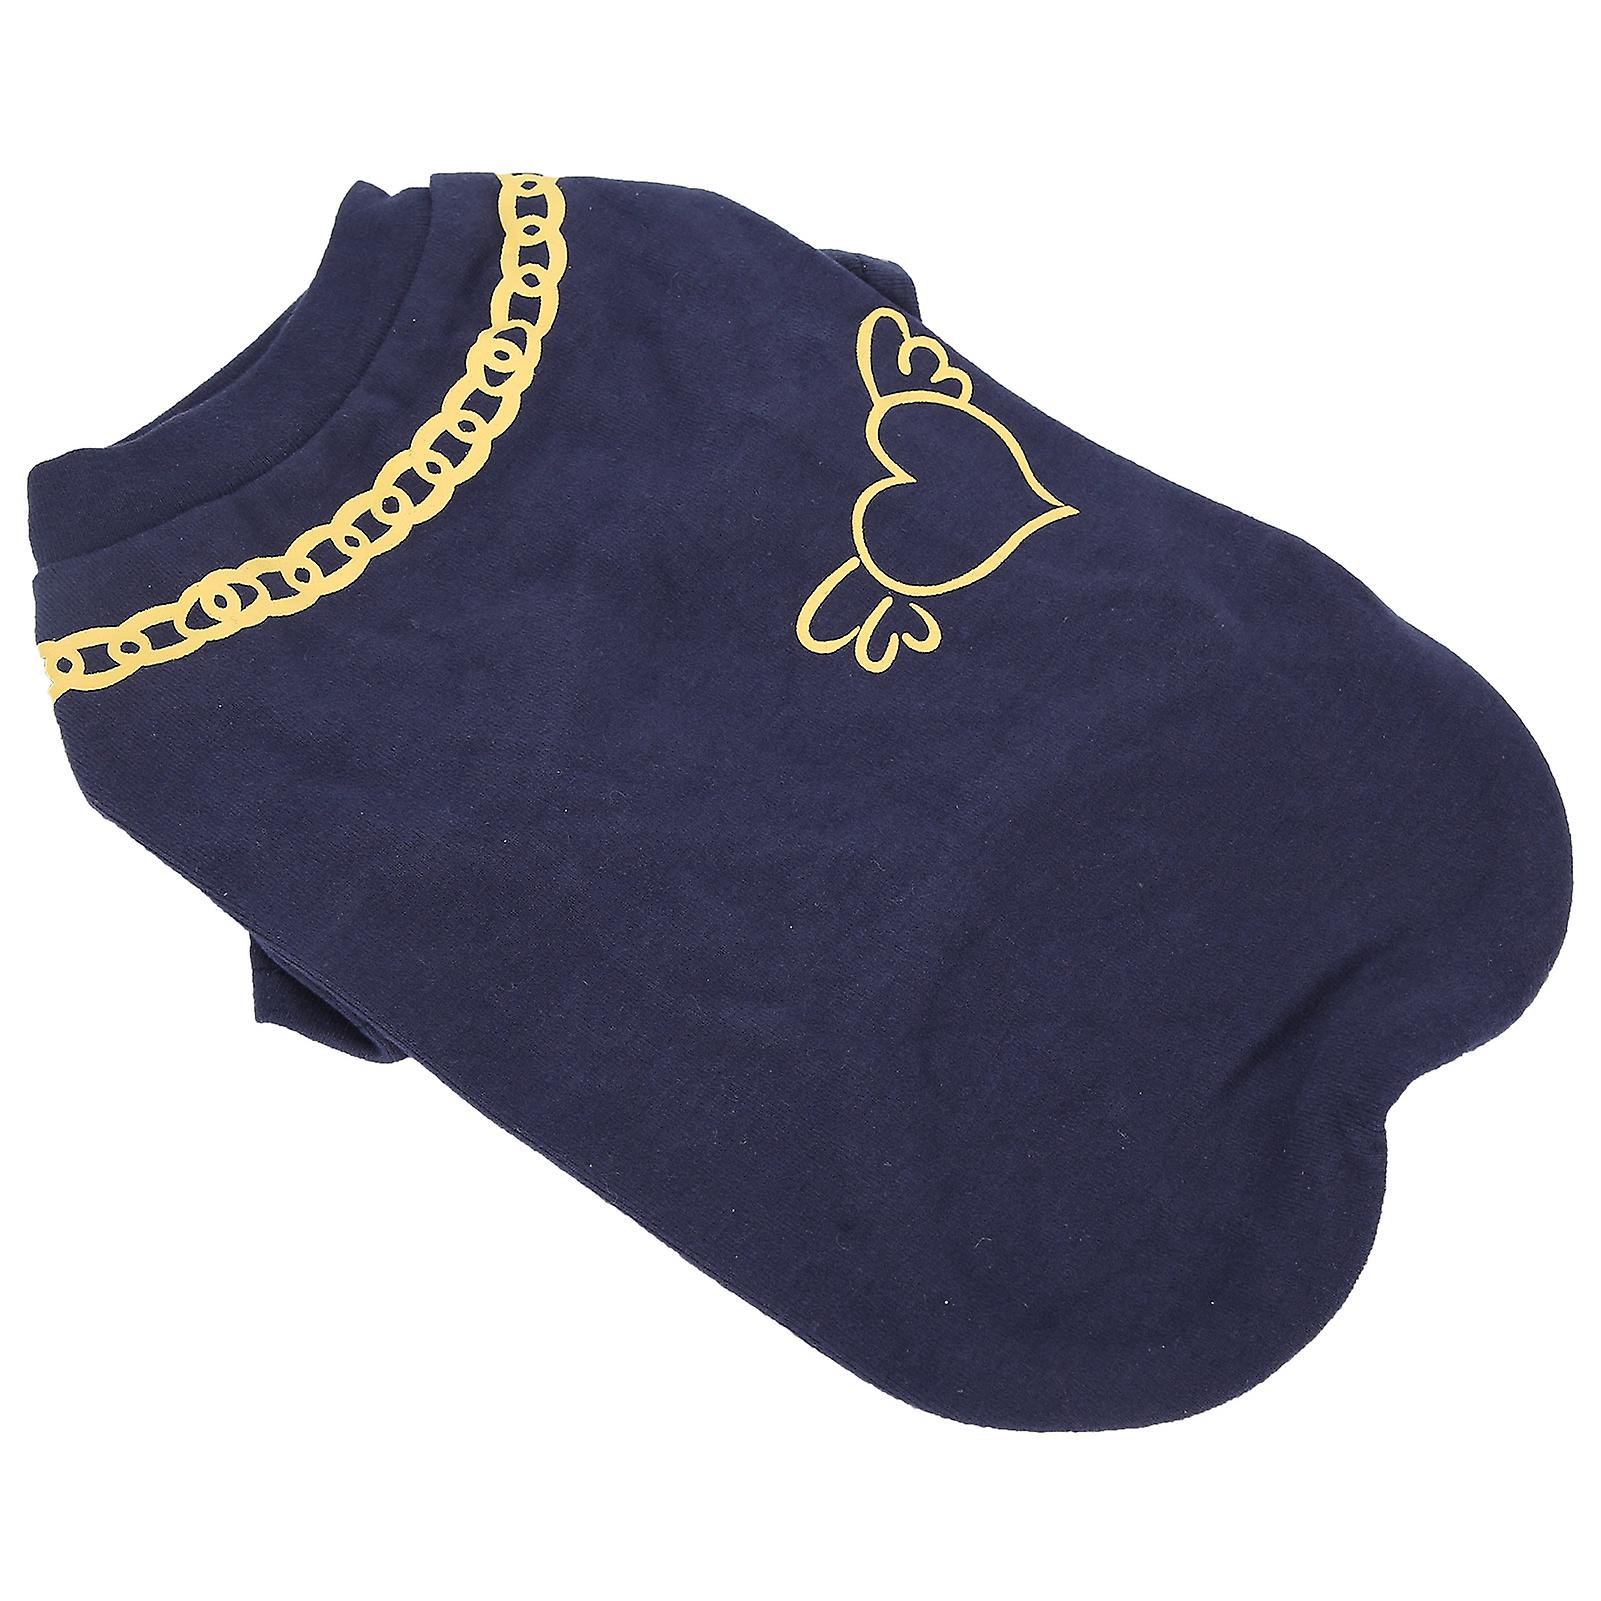 Blue Pet Clothes Cotton Dog Shirts Spring Printing Cute Puppy Vest Pet Suppliesblue S